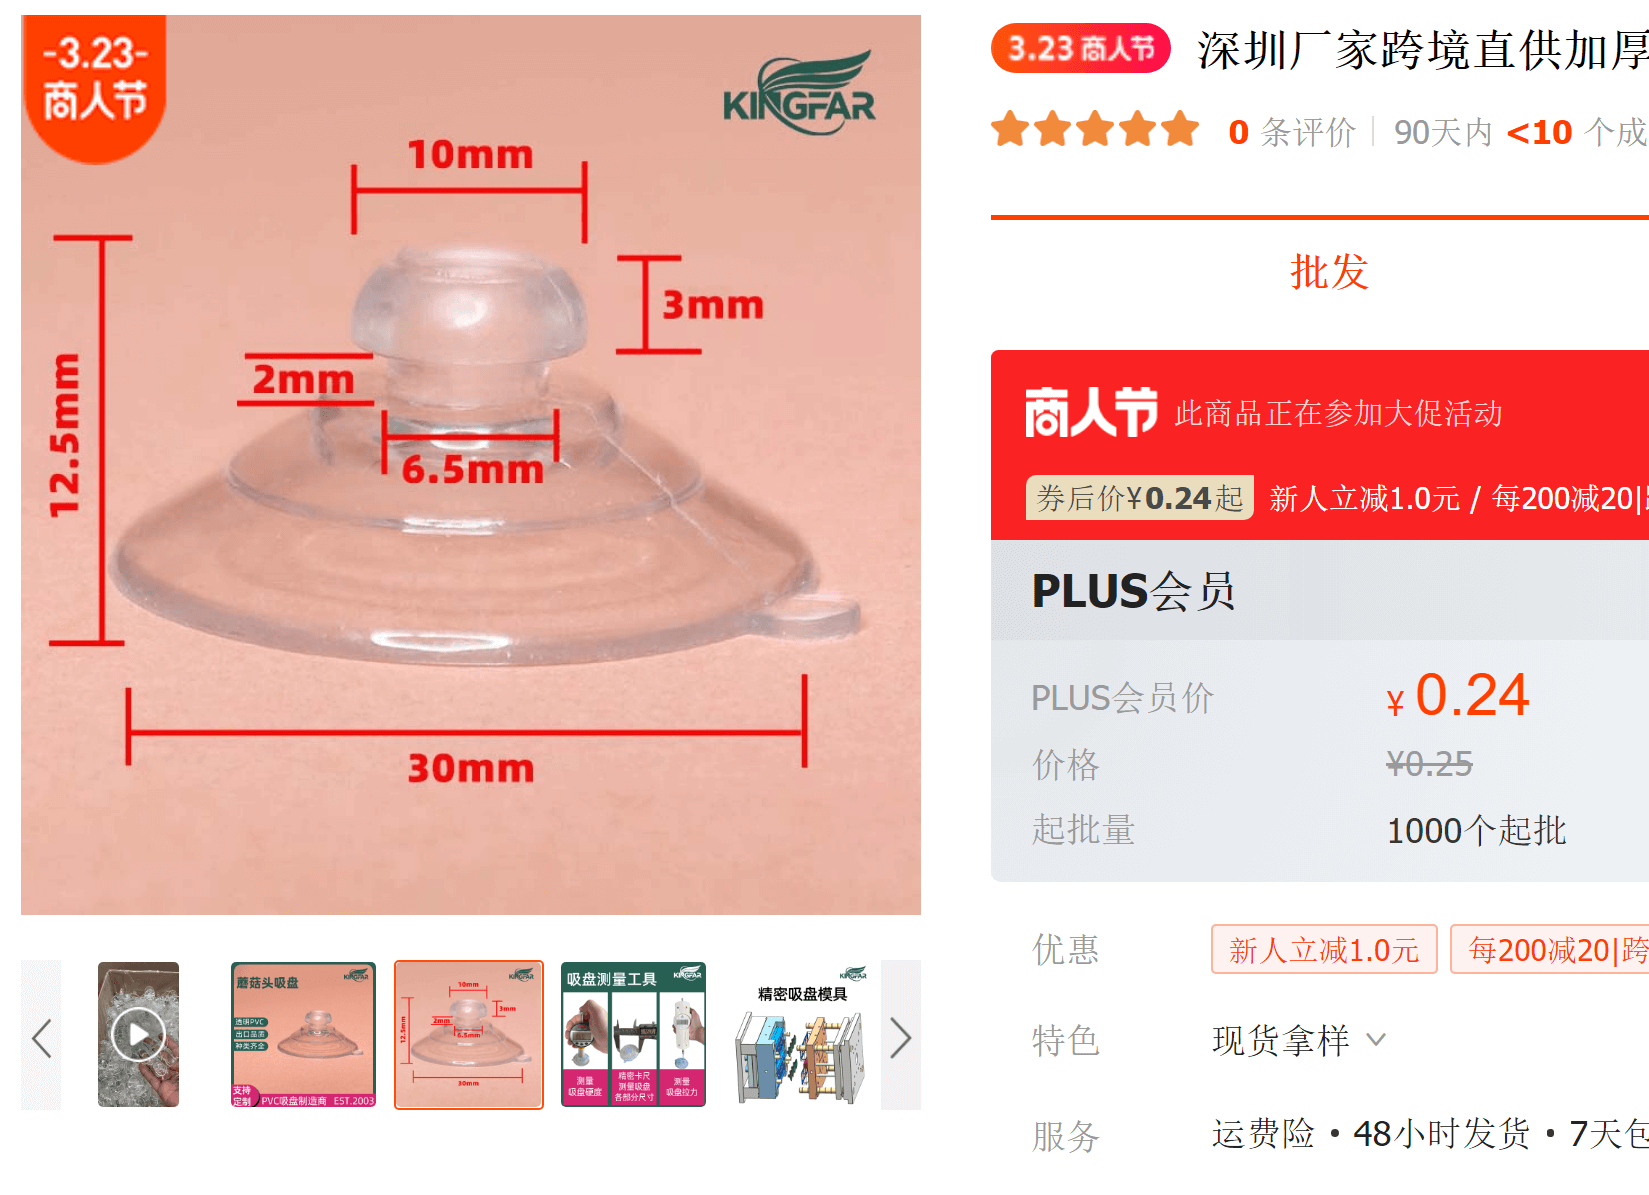 kingfar suction cup price